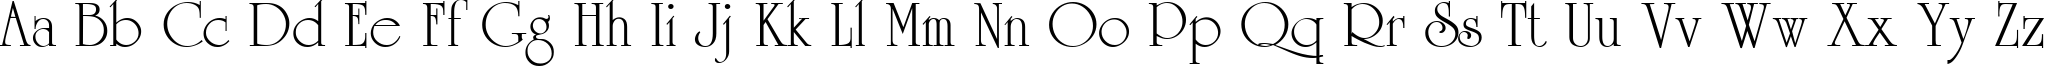 Пример написания английского алфавита шрифтом Unicorn Rus